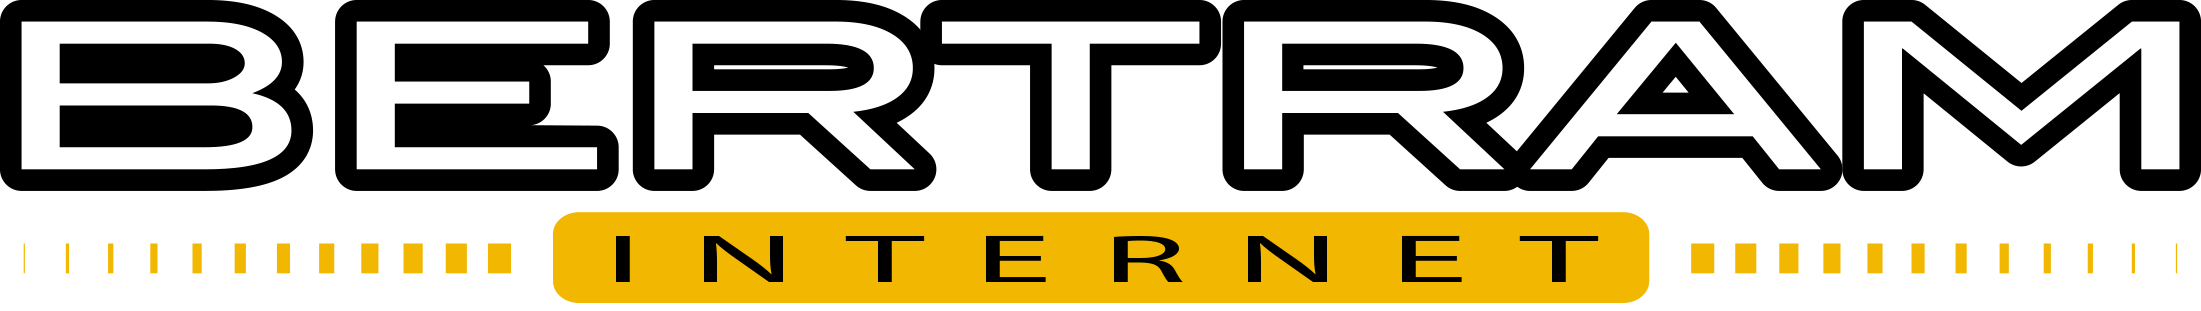 Bertram-Internet-Basic-Logo.png